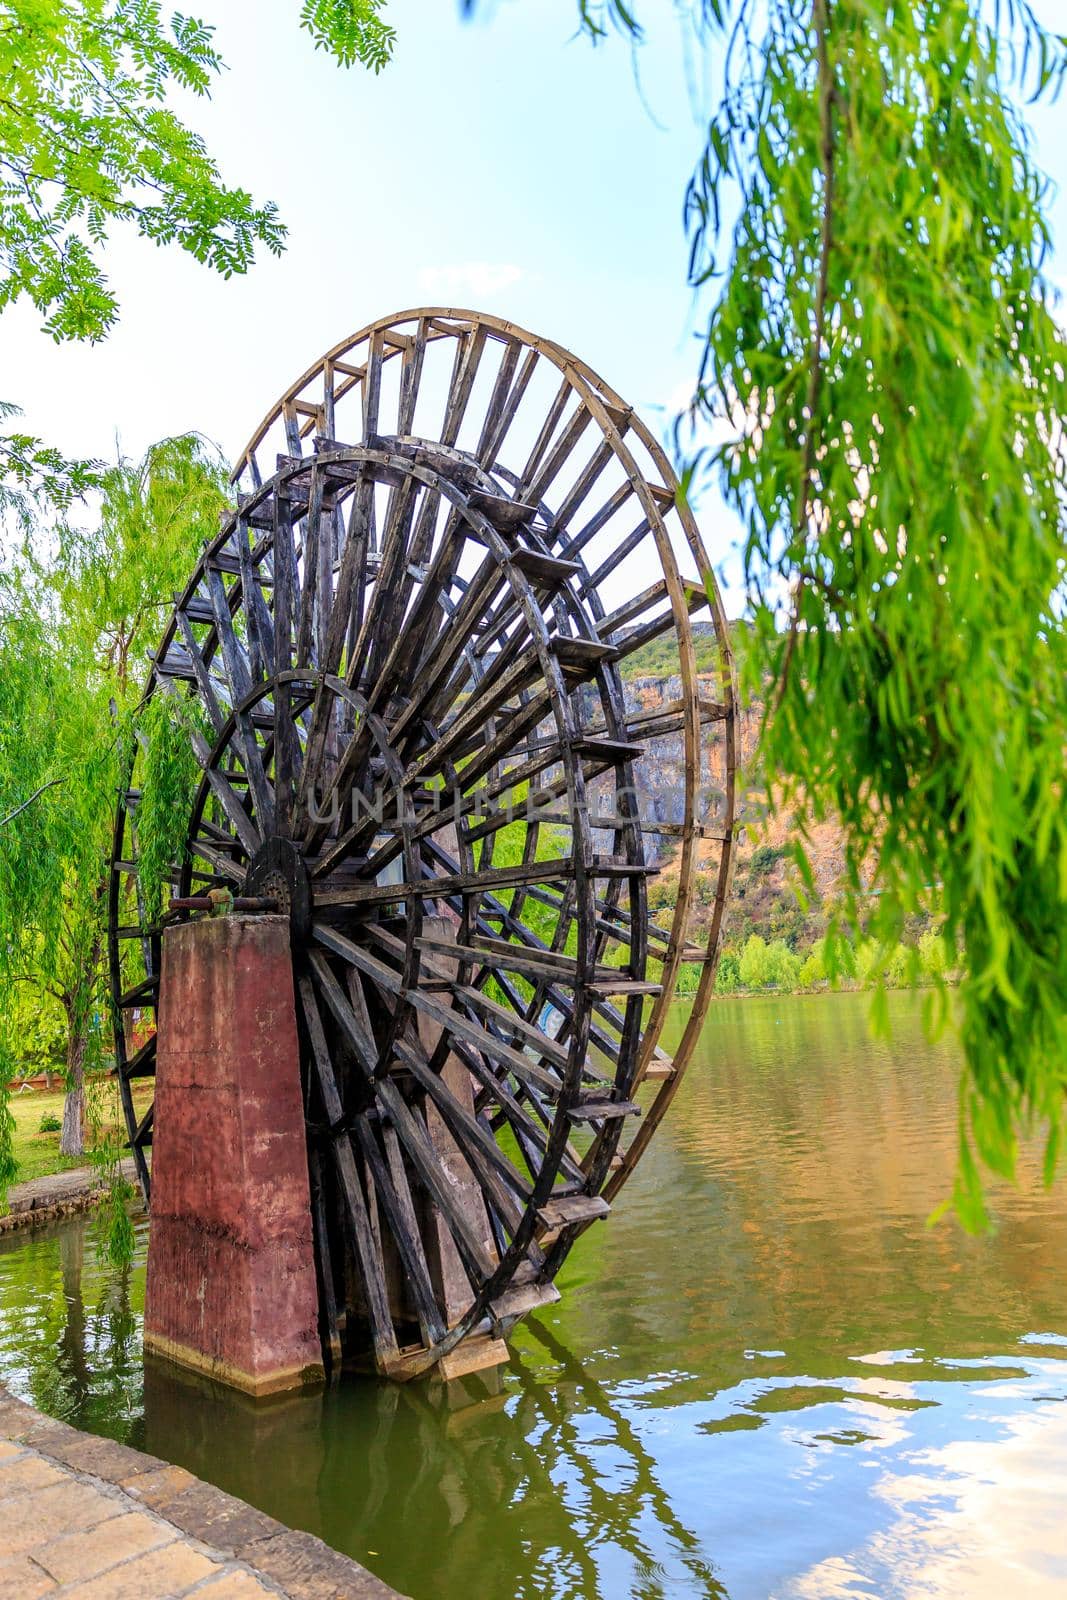 Water Wheel by gepeng